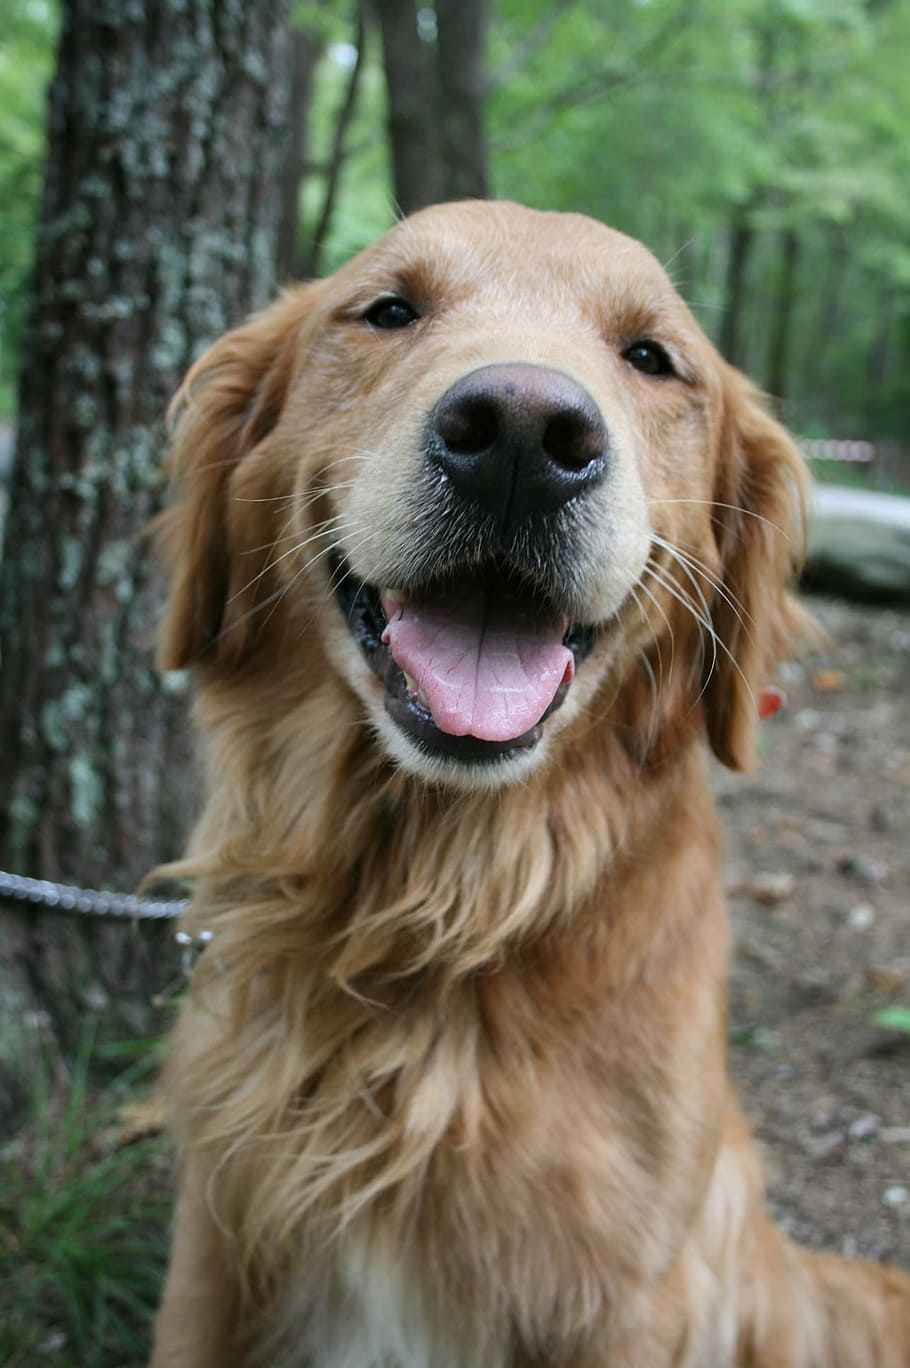 HD wallpaper: adult golden retriever smiling, dog, labrador, camping ... - Dog GolDen Retriever LabraDor Lab